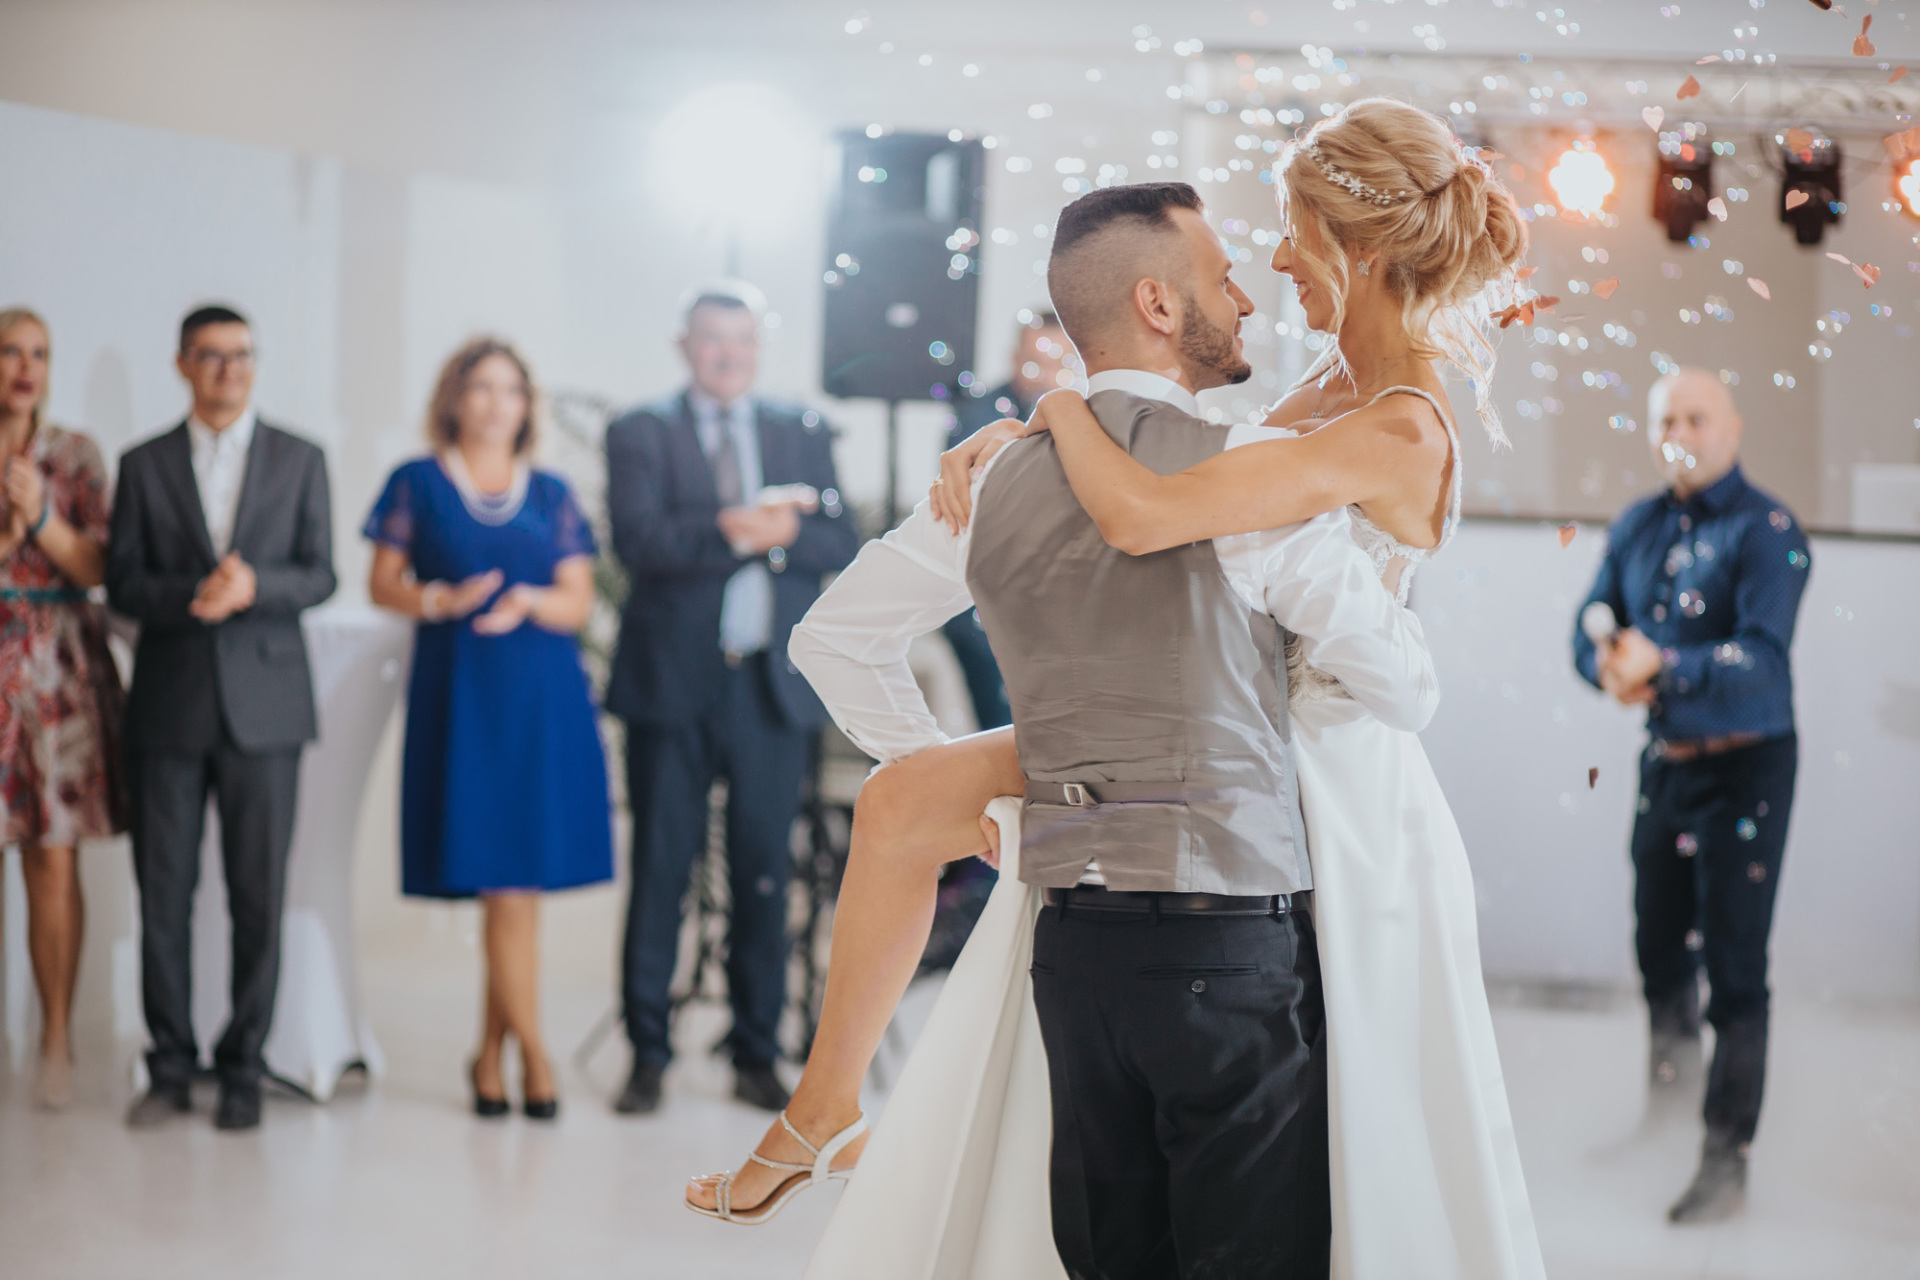 PTR Weddings | Kamerzysta na wesele Toruń, kujawsko-pomorskie - cover 2